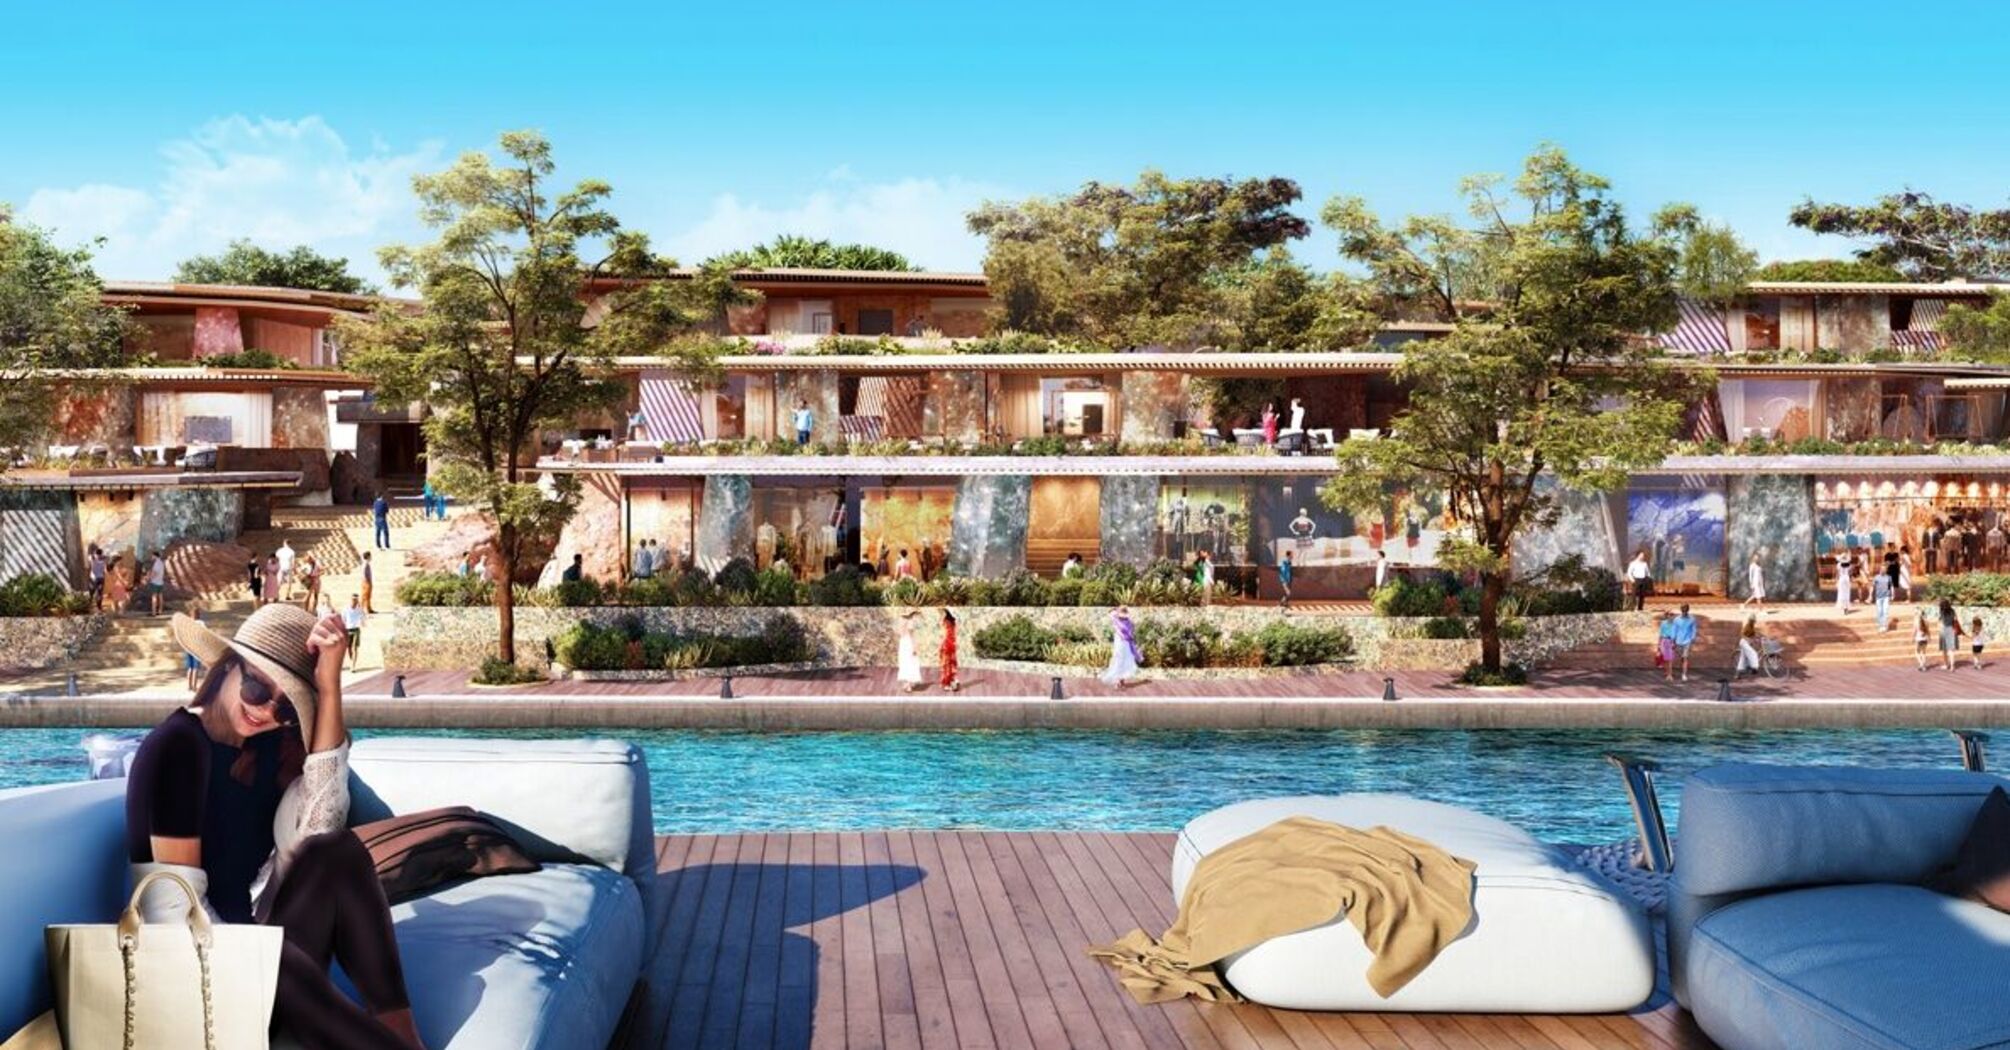 Marriott International apartments will appear on a luxury island resort in Saudi Arabia